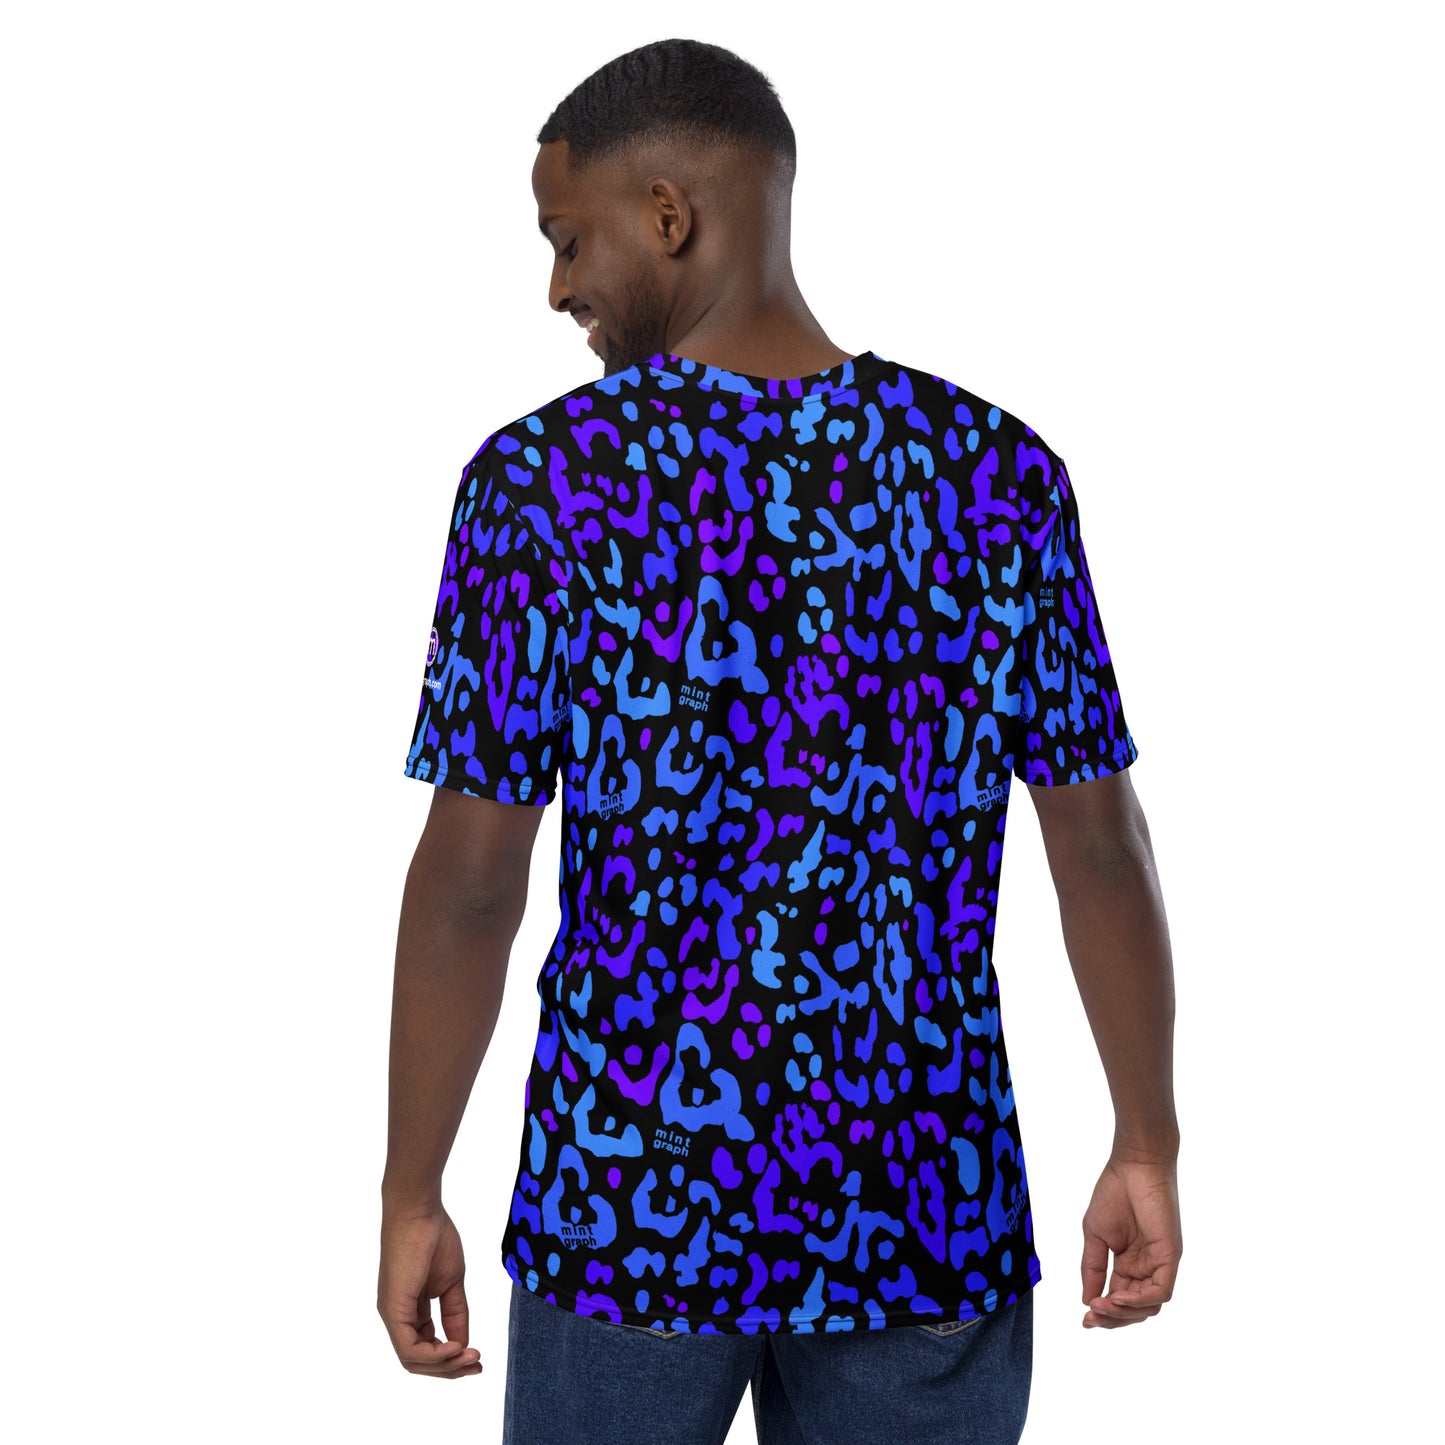 Men's allover print t-shirt - leopard pattern design in blue/purple colors